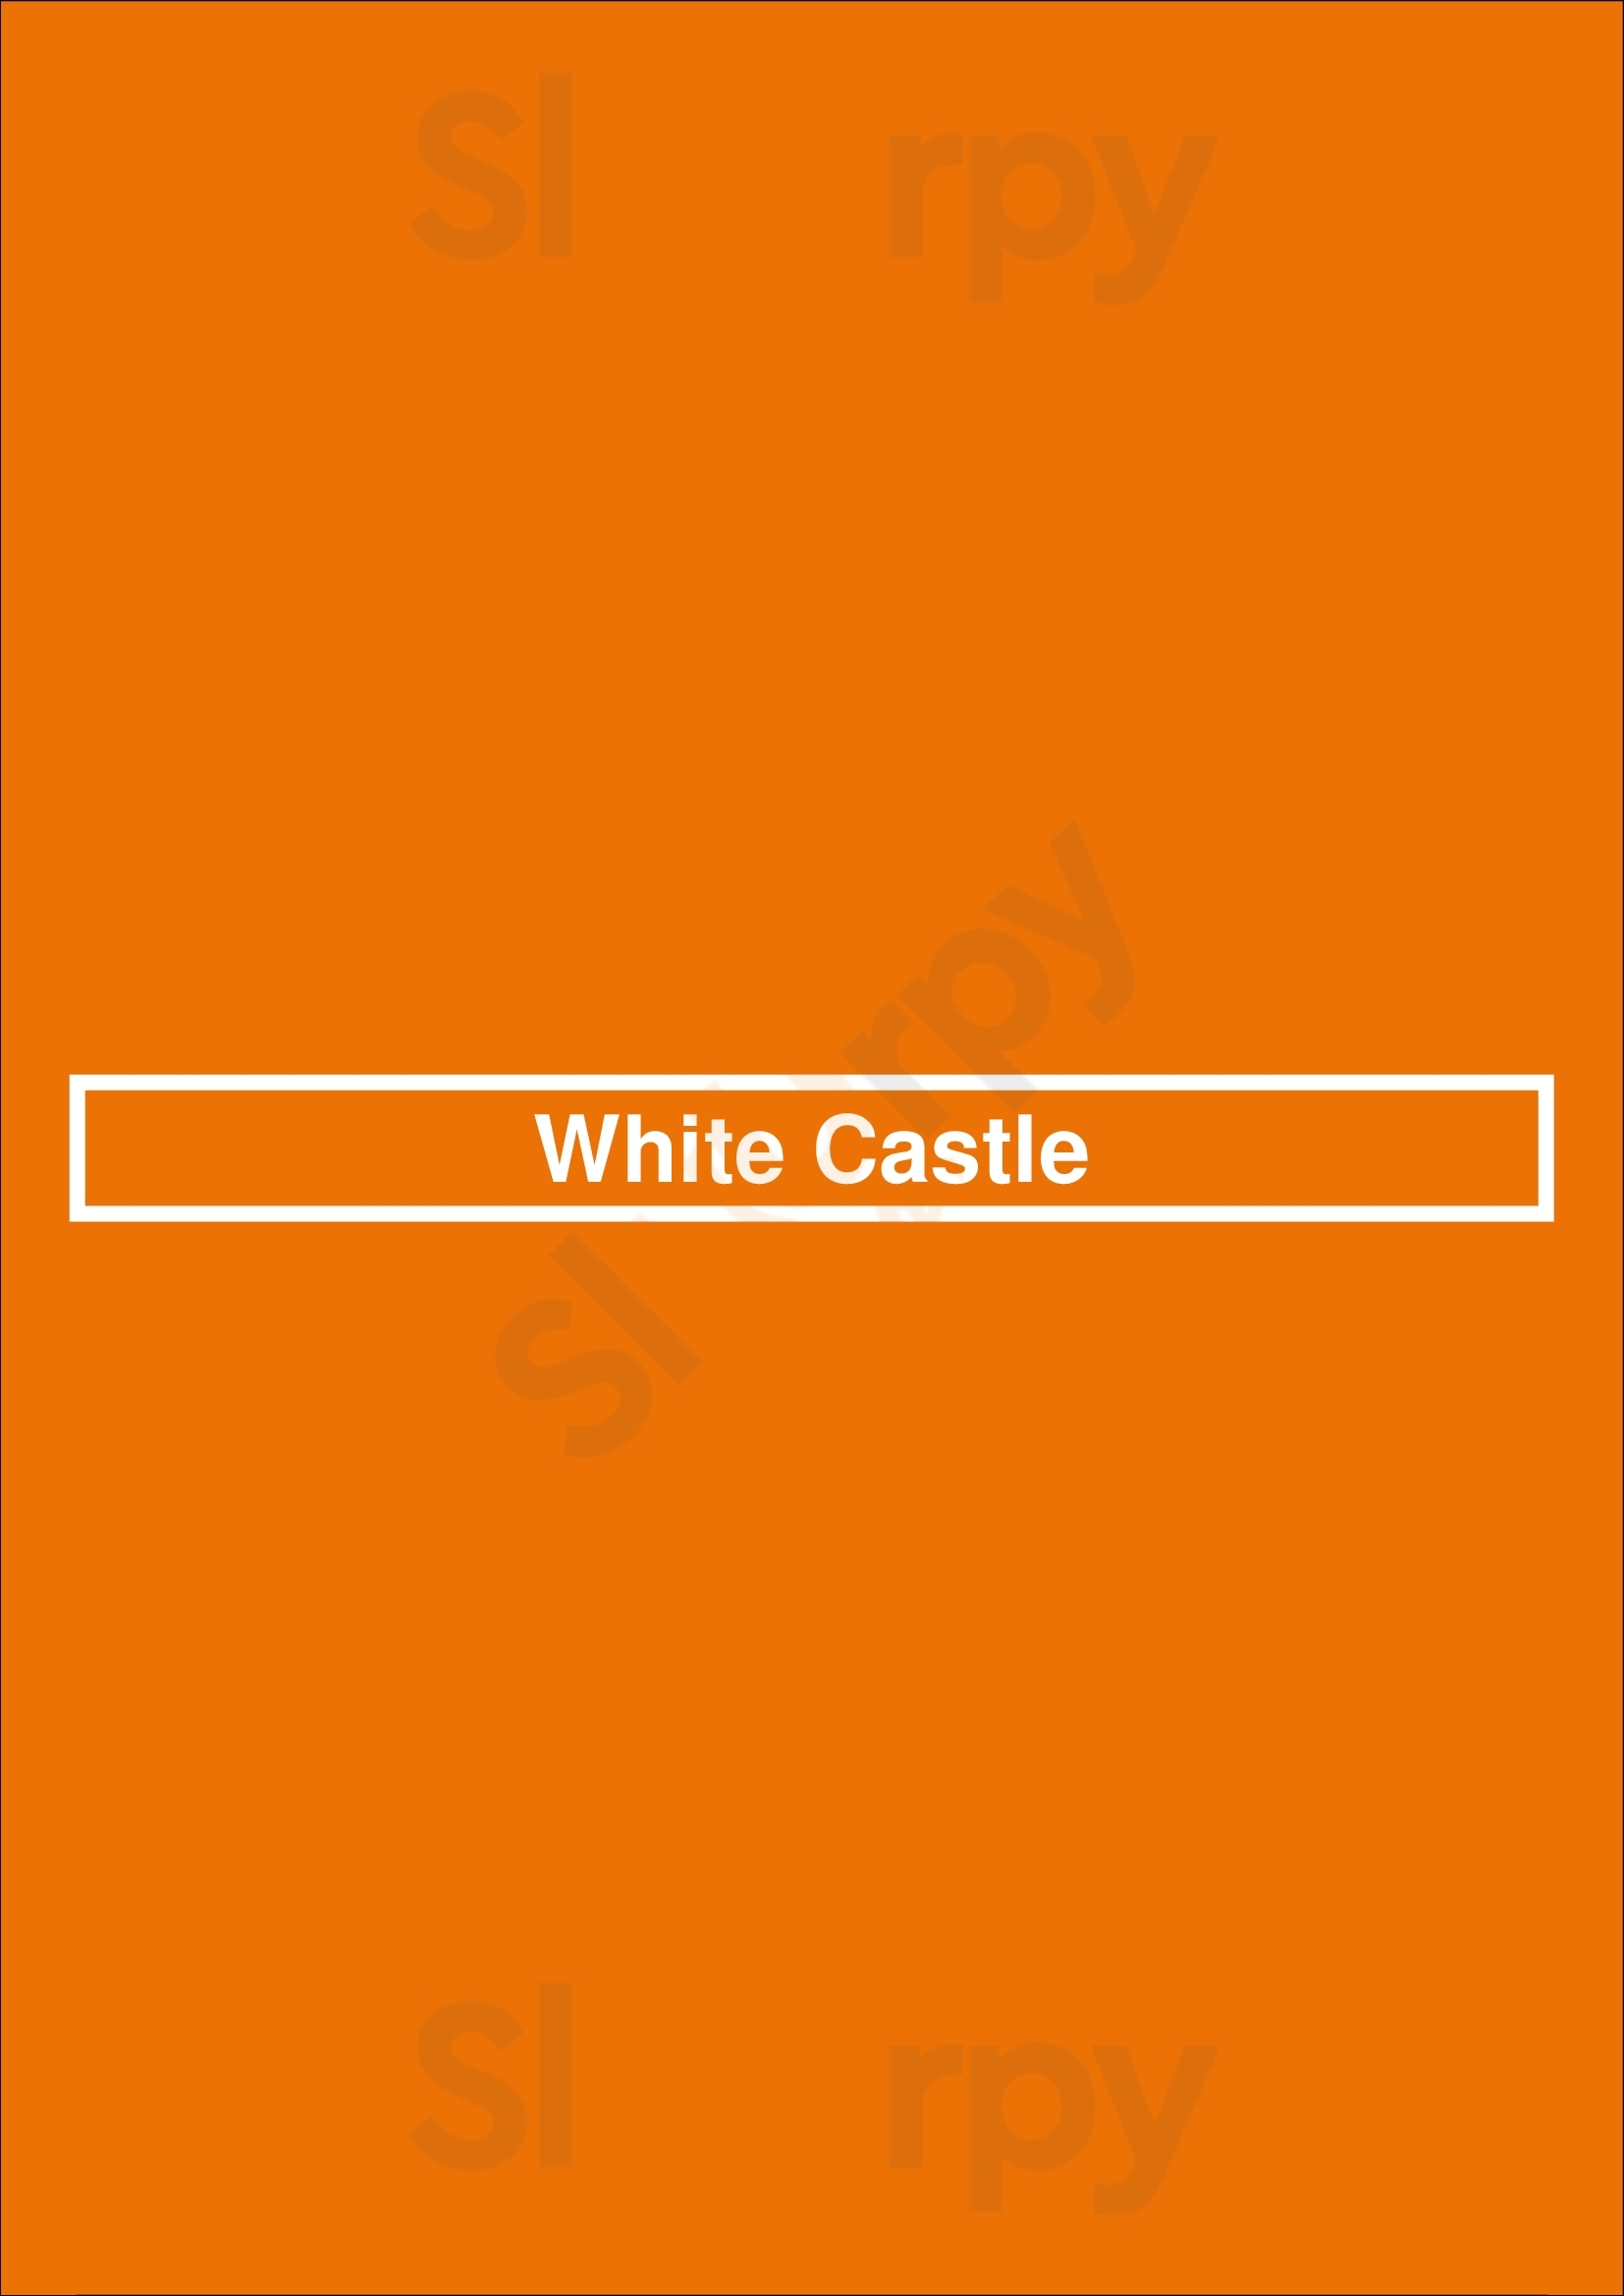 White Castle Columbus Menu - 1